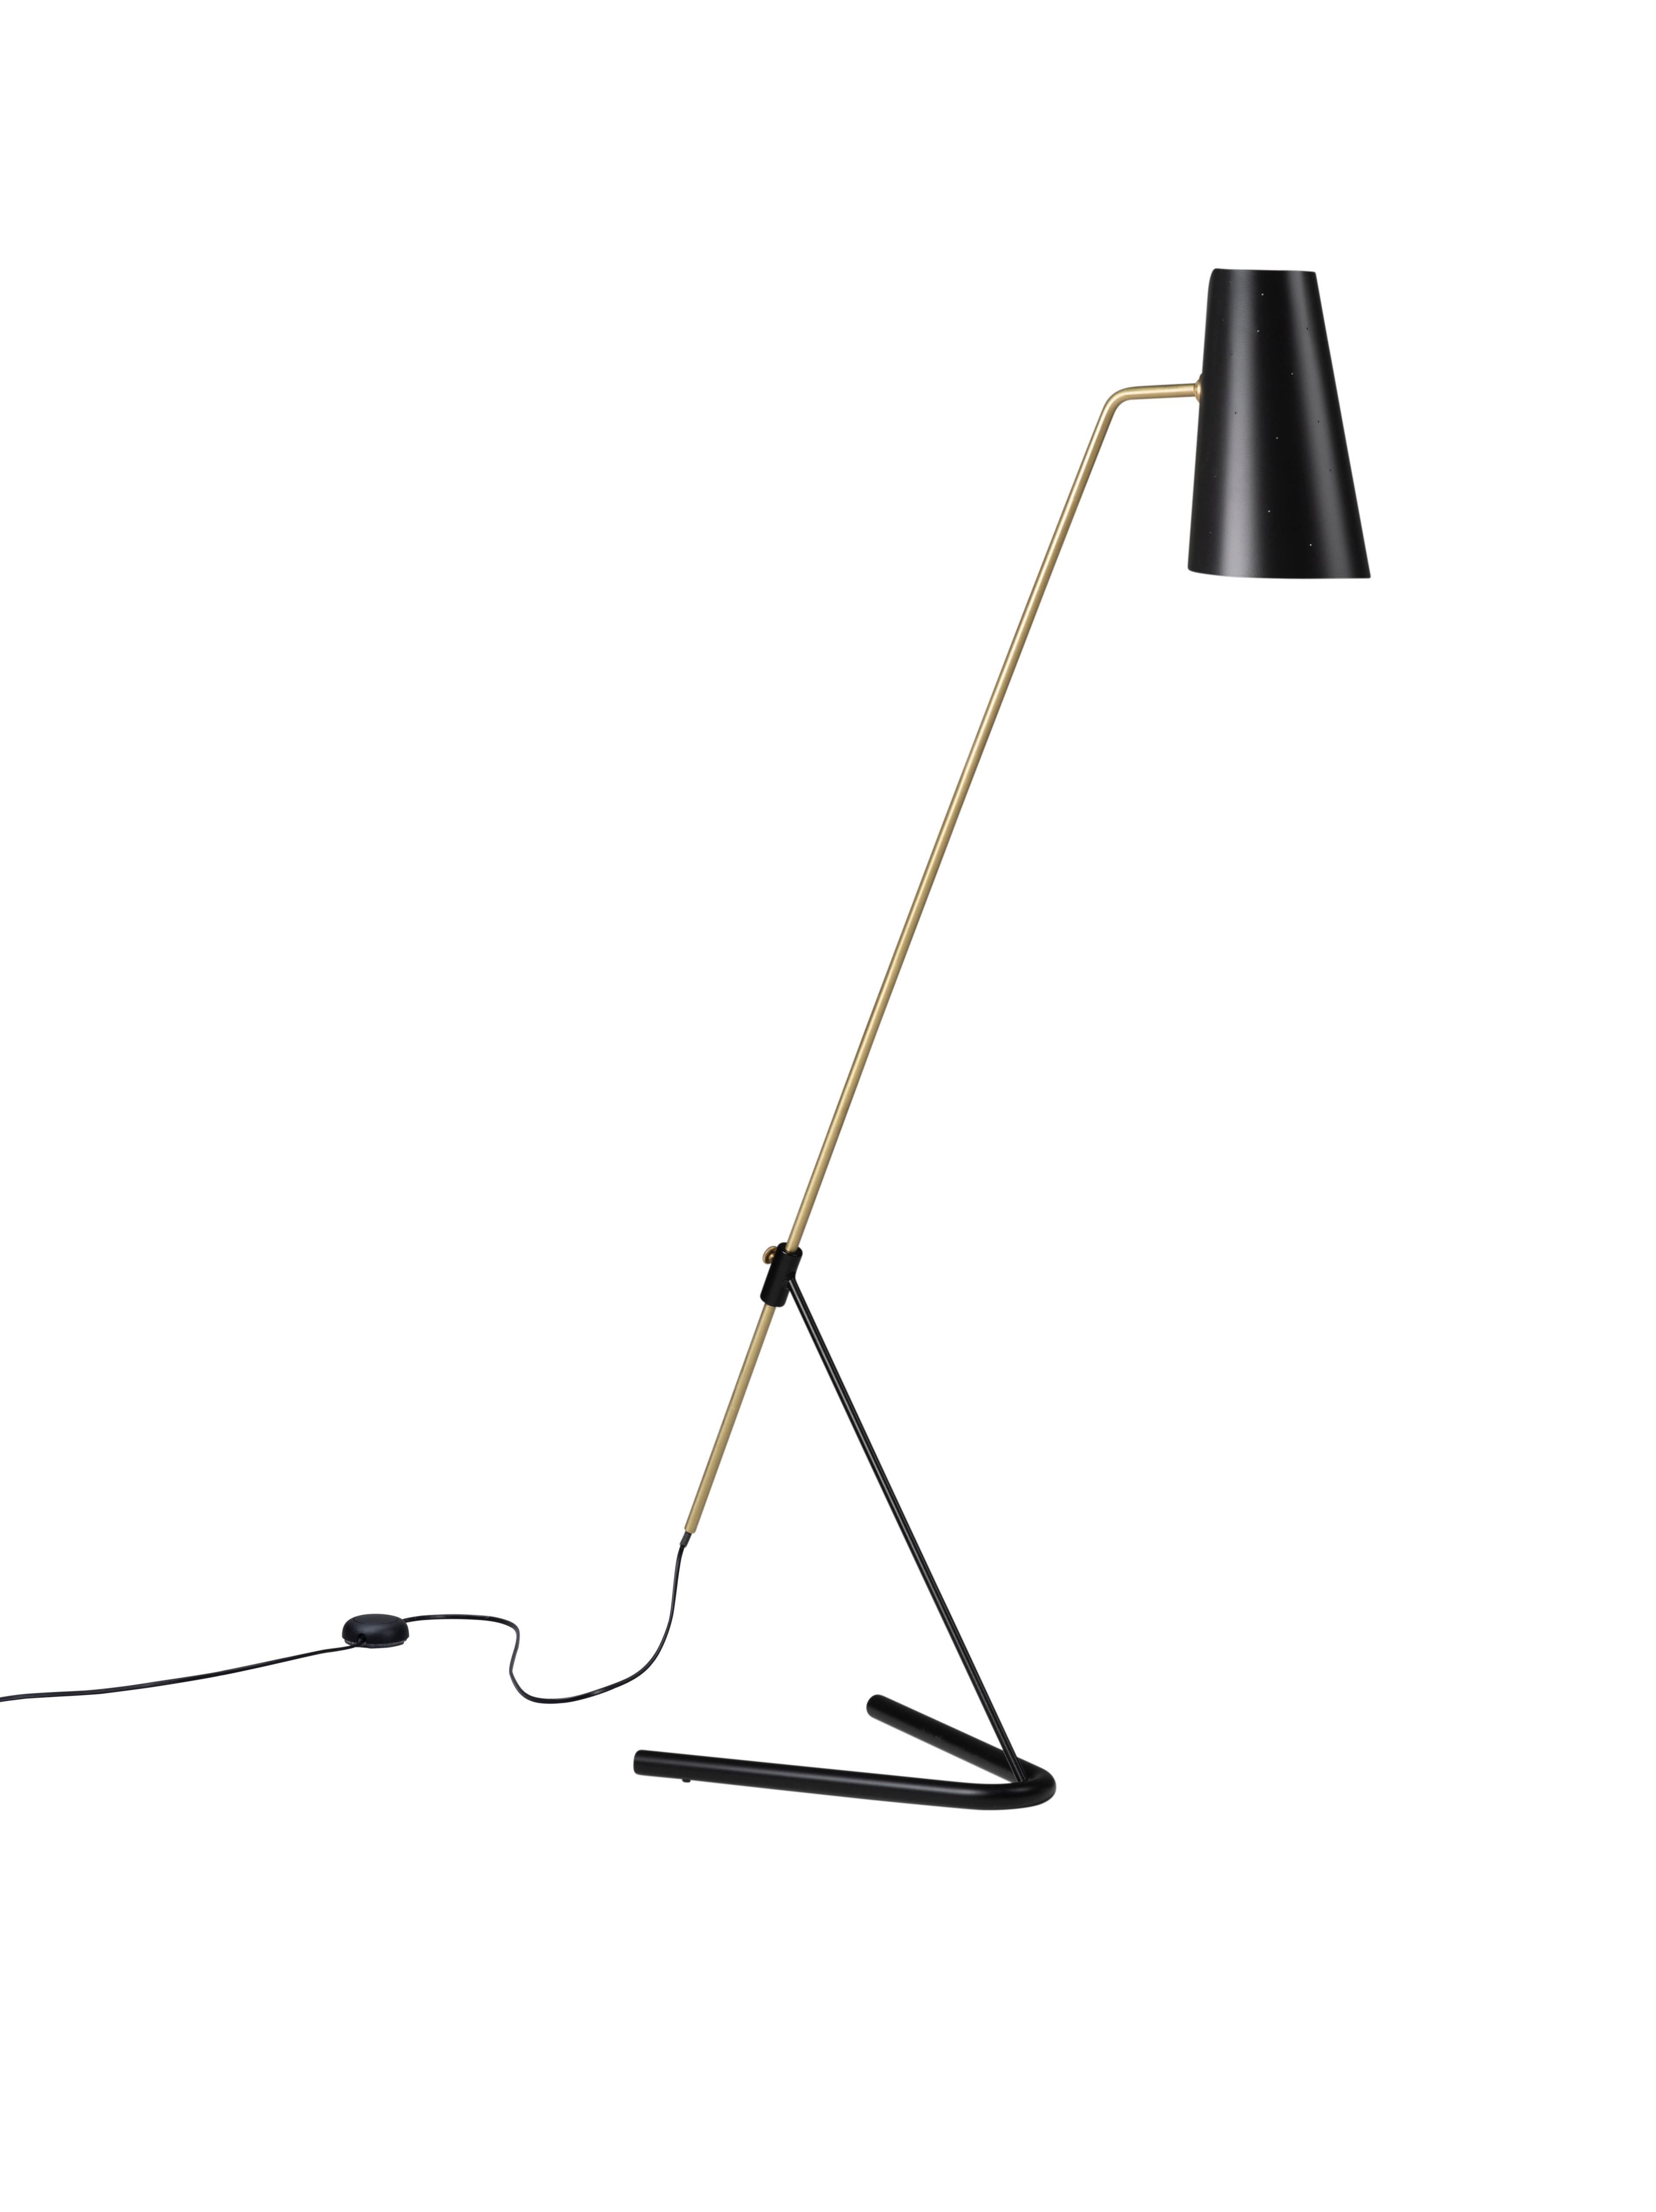 Pierre Guariche 'G21' Adjustable Floor Lamp for Sammode Studio in Black For Sale 2